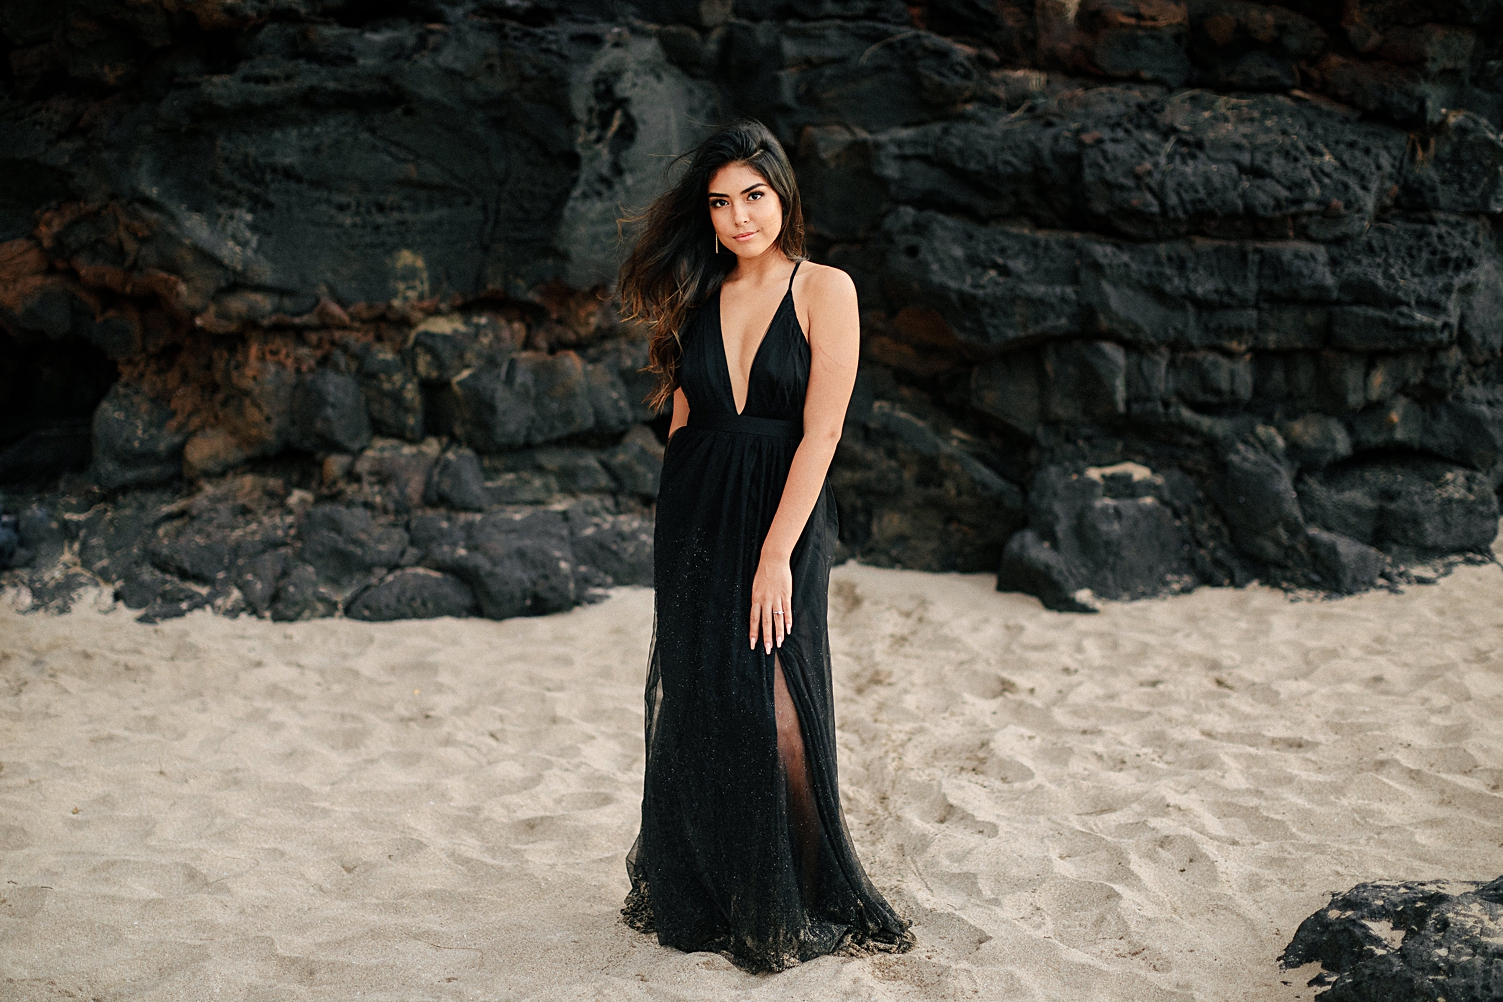 Hawaiian girl in black tulle dress rocky beach